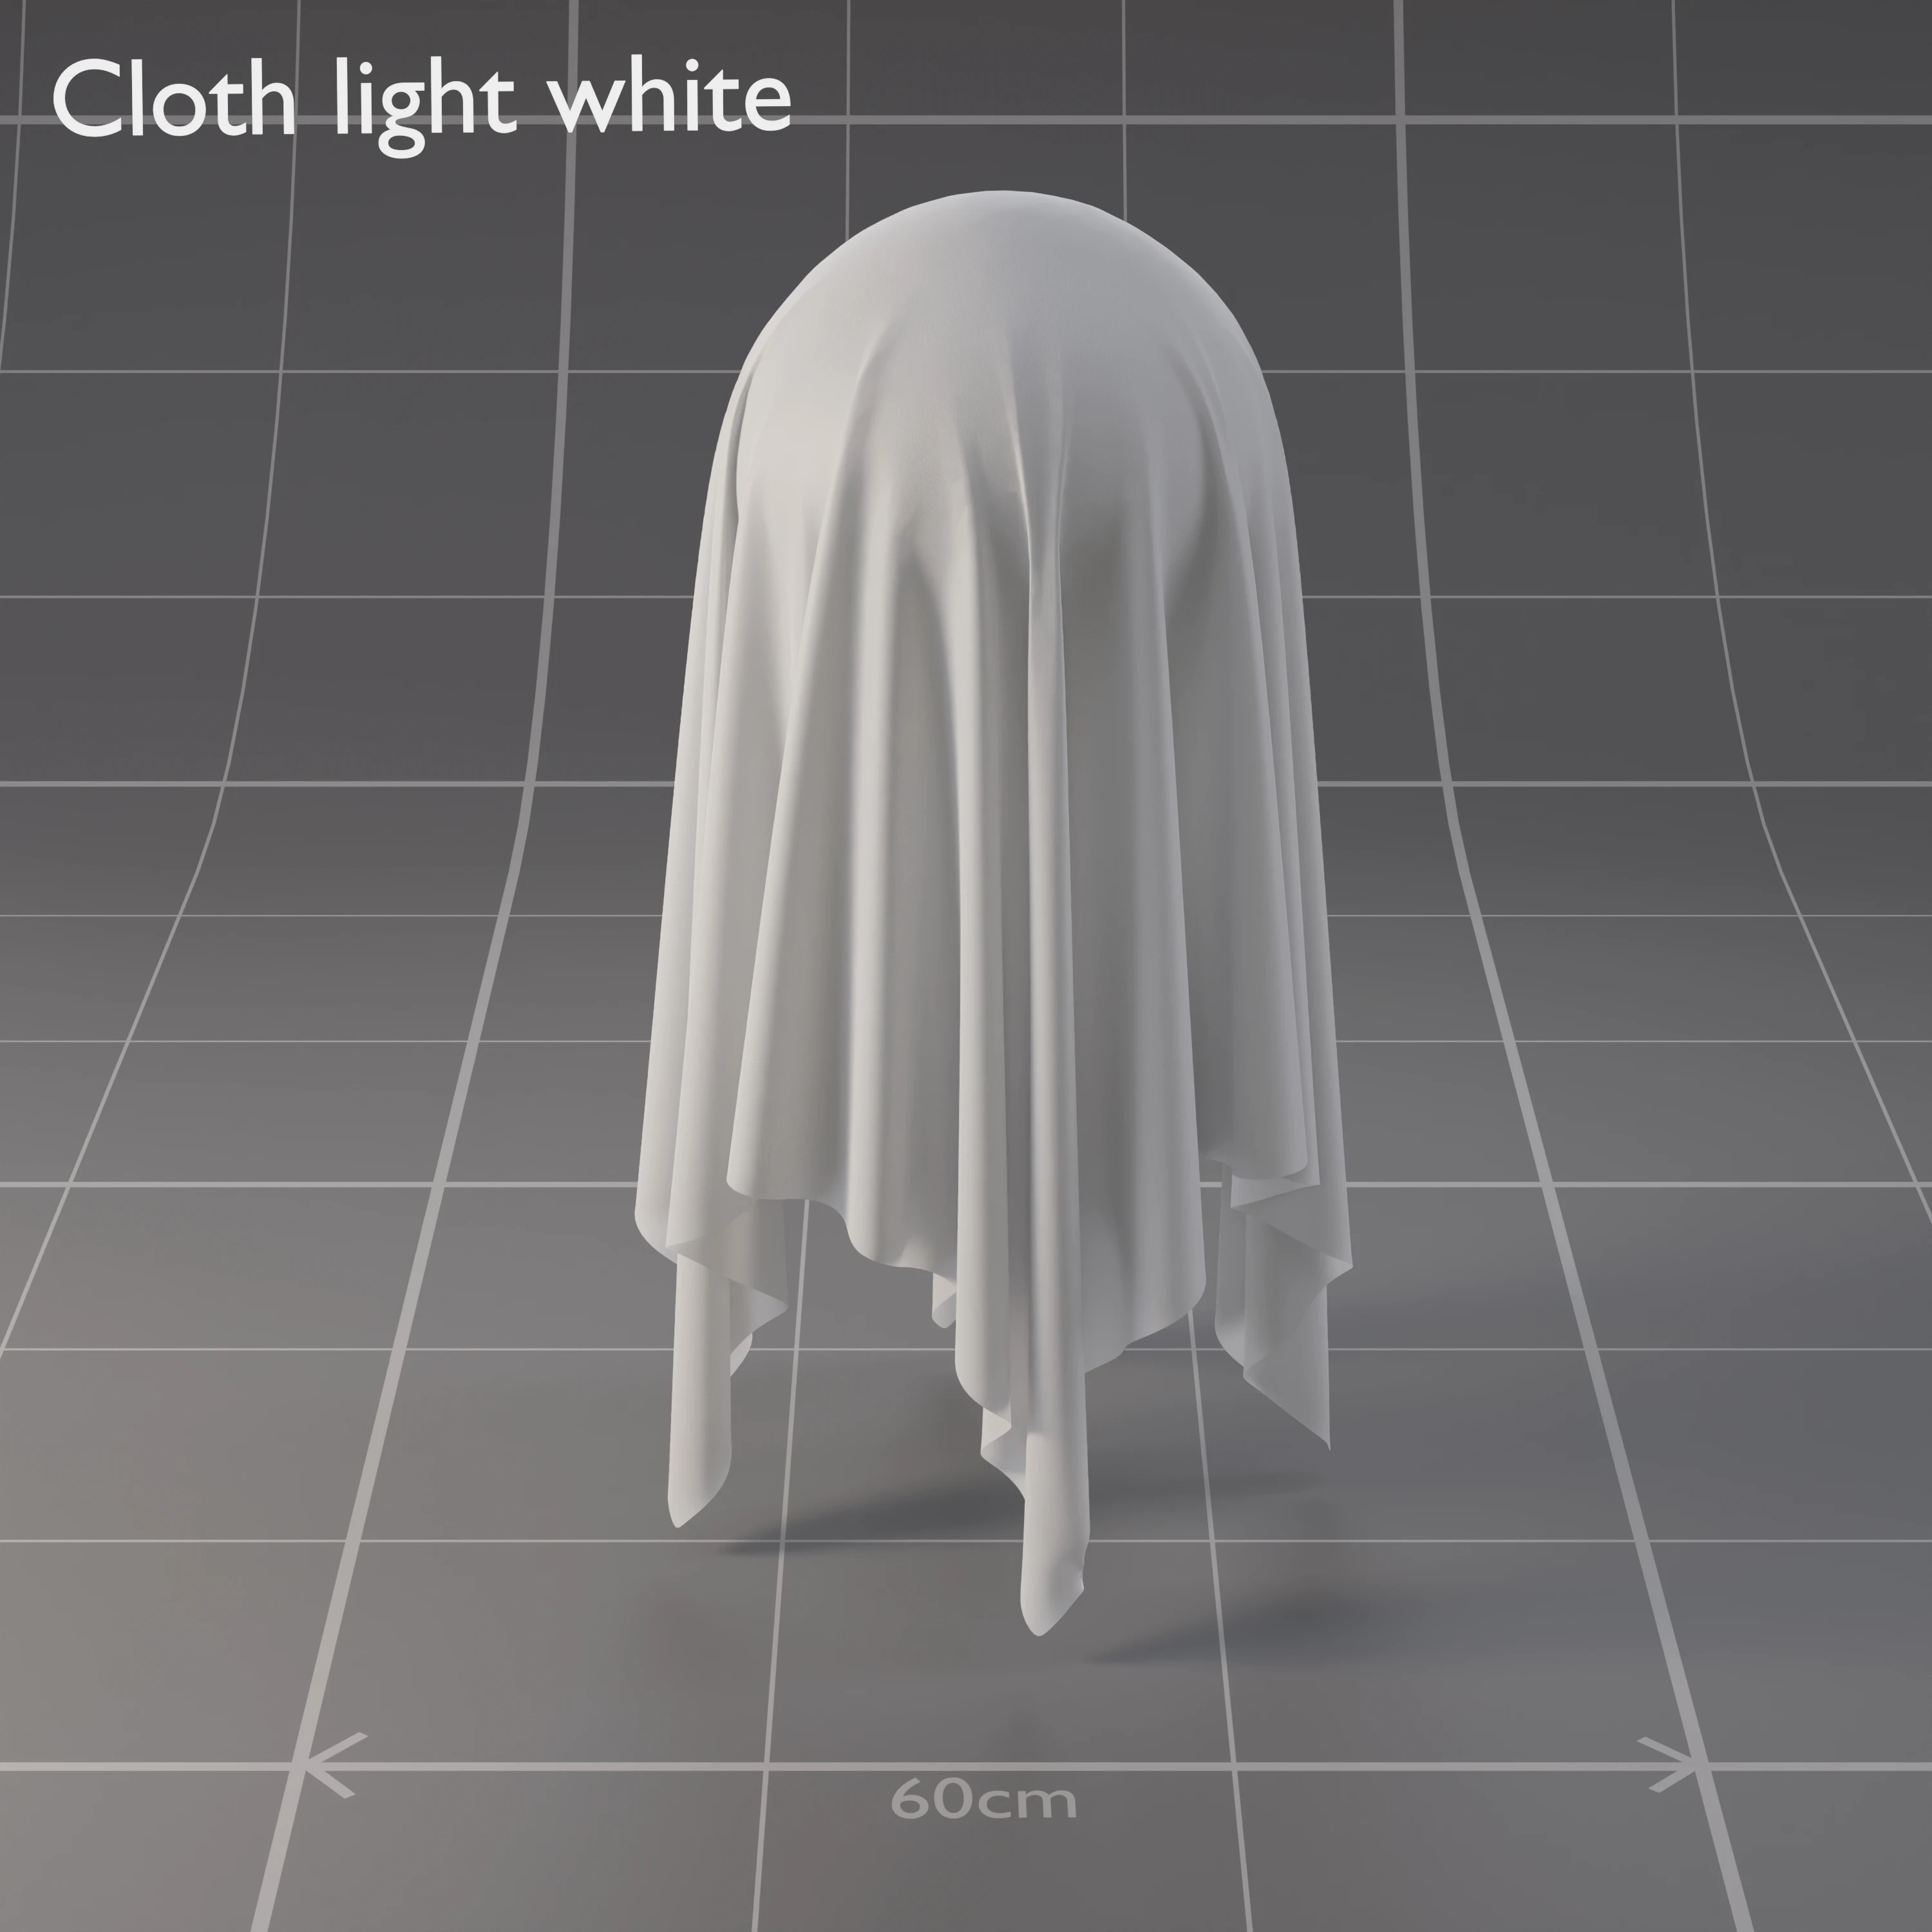 /pr/image/mats/Cloth light white.WebP